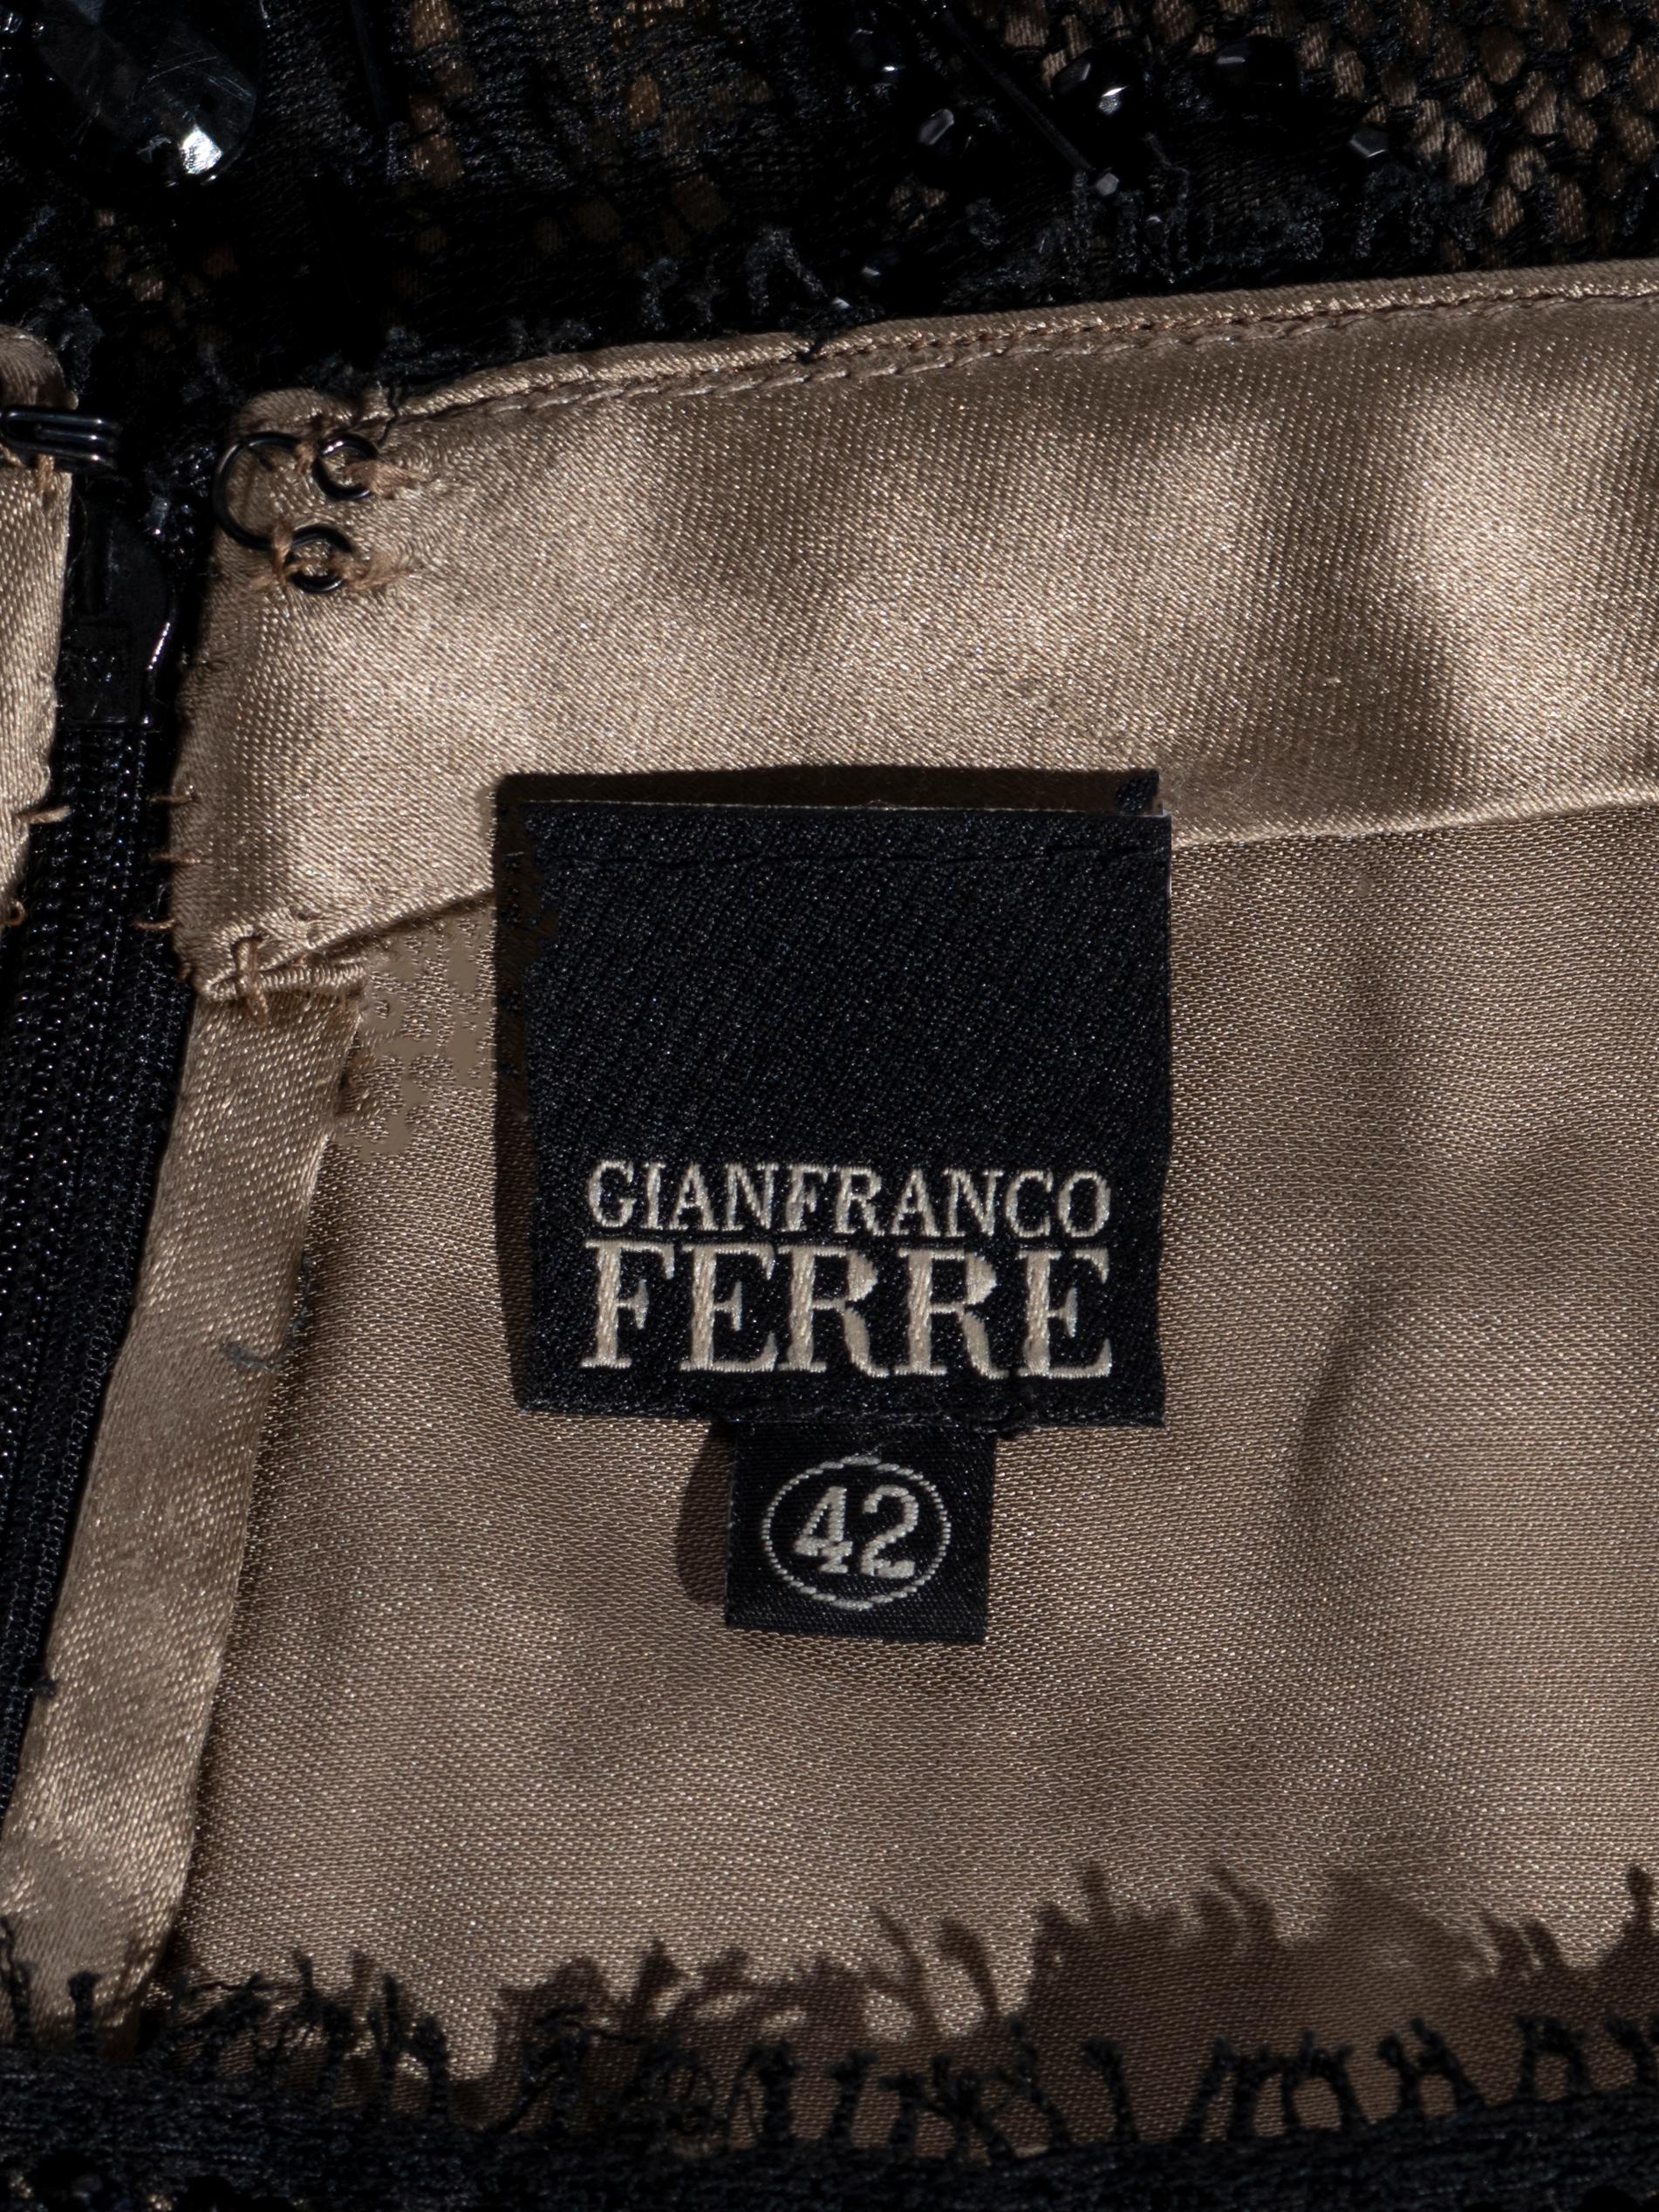 Gianfranco Ferré black beaded lace evening pants, ss 2002 For Sale 4